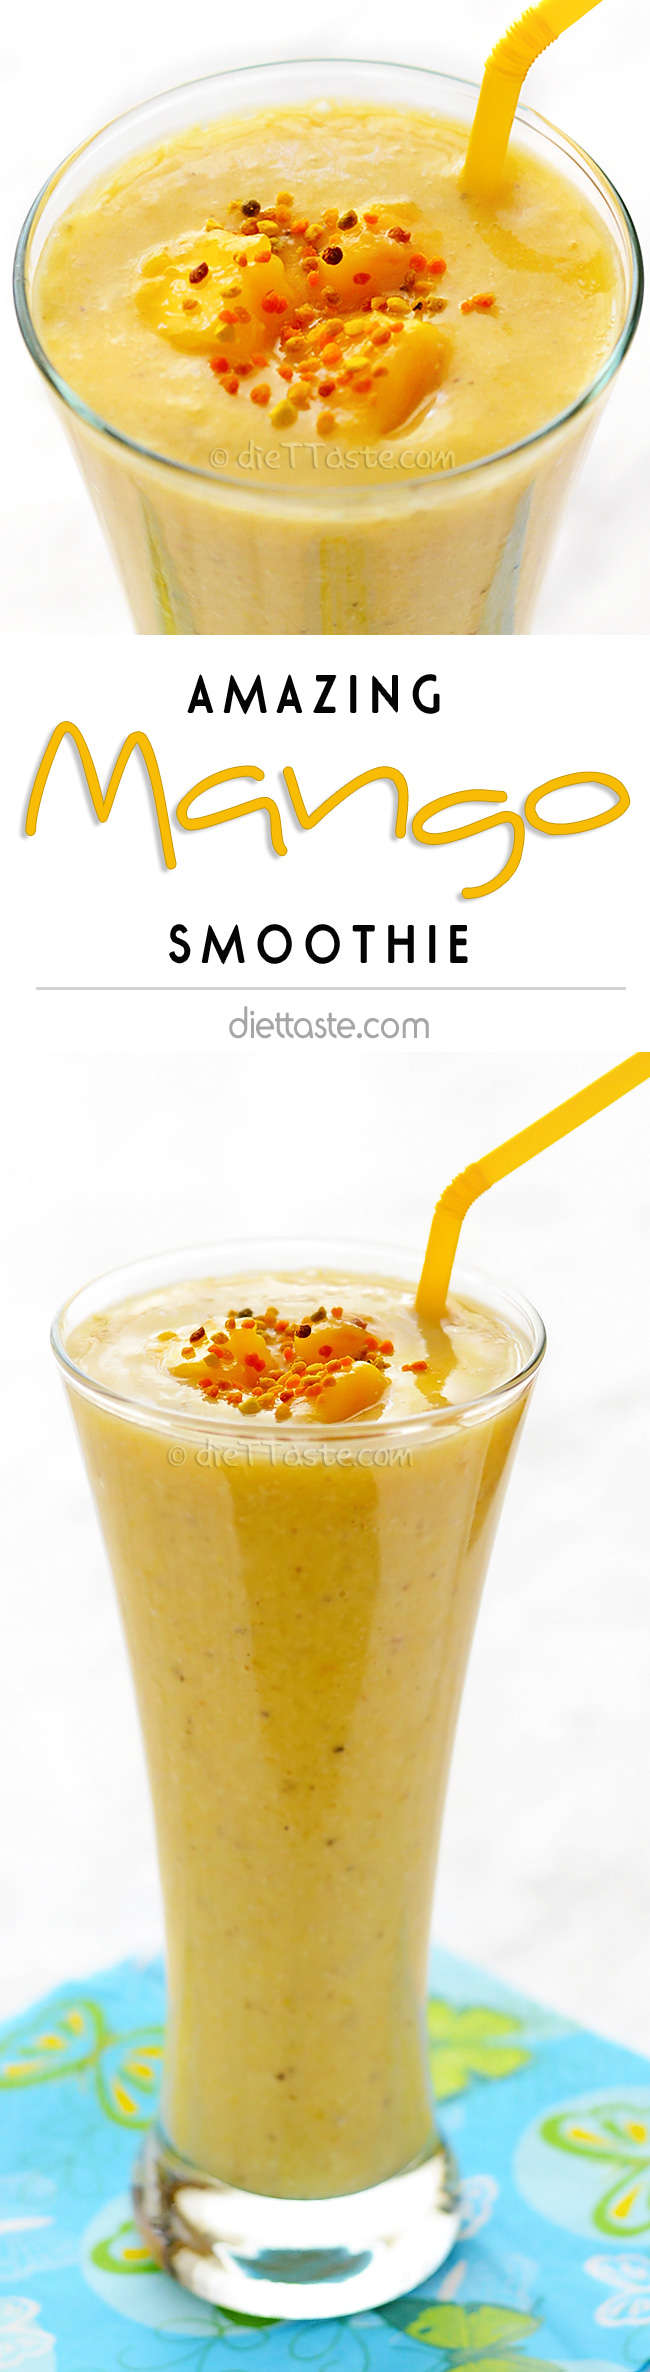 Amazing Mango Smoothie - diettaste.com 